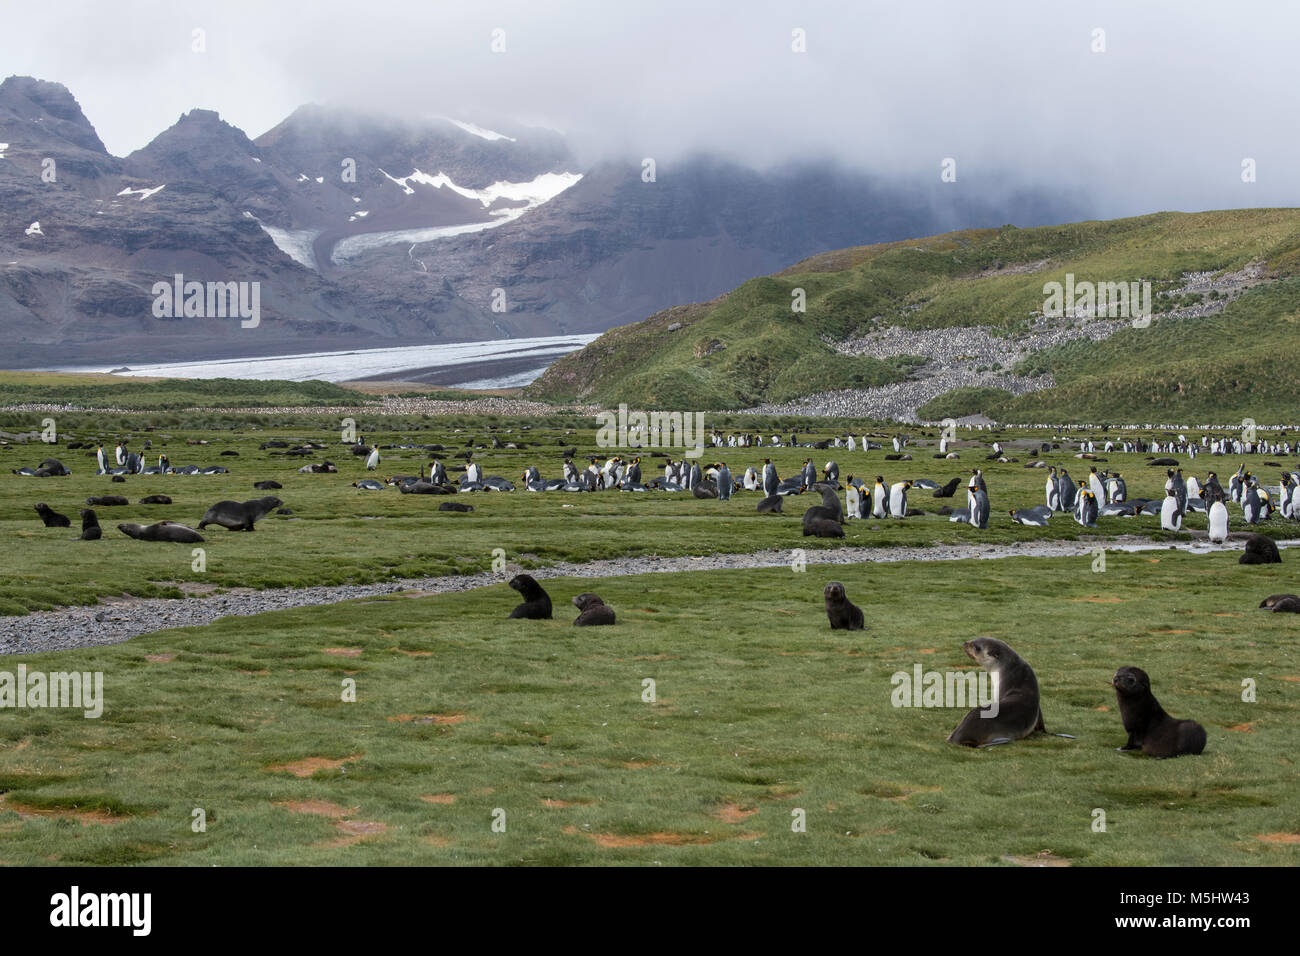 South Georgia, Salisbury Plain. King penguins and fur seals in typical tussock grass habitat. Stock Photo